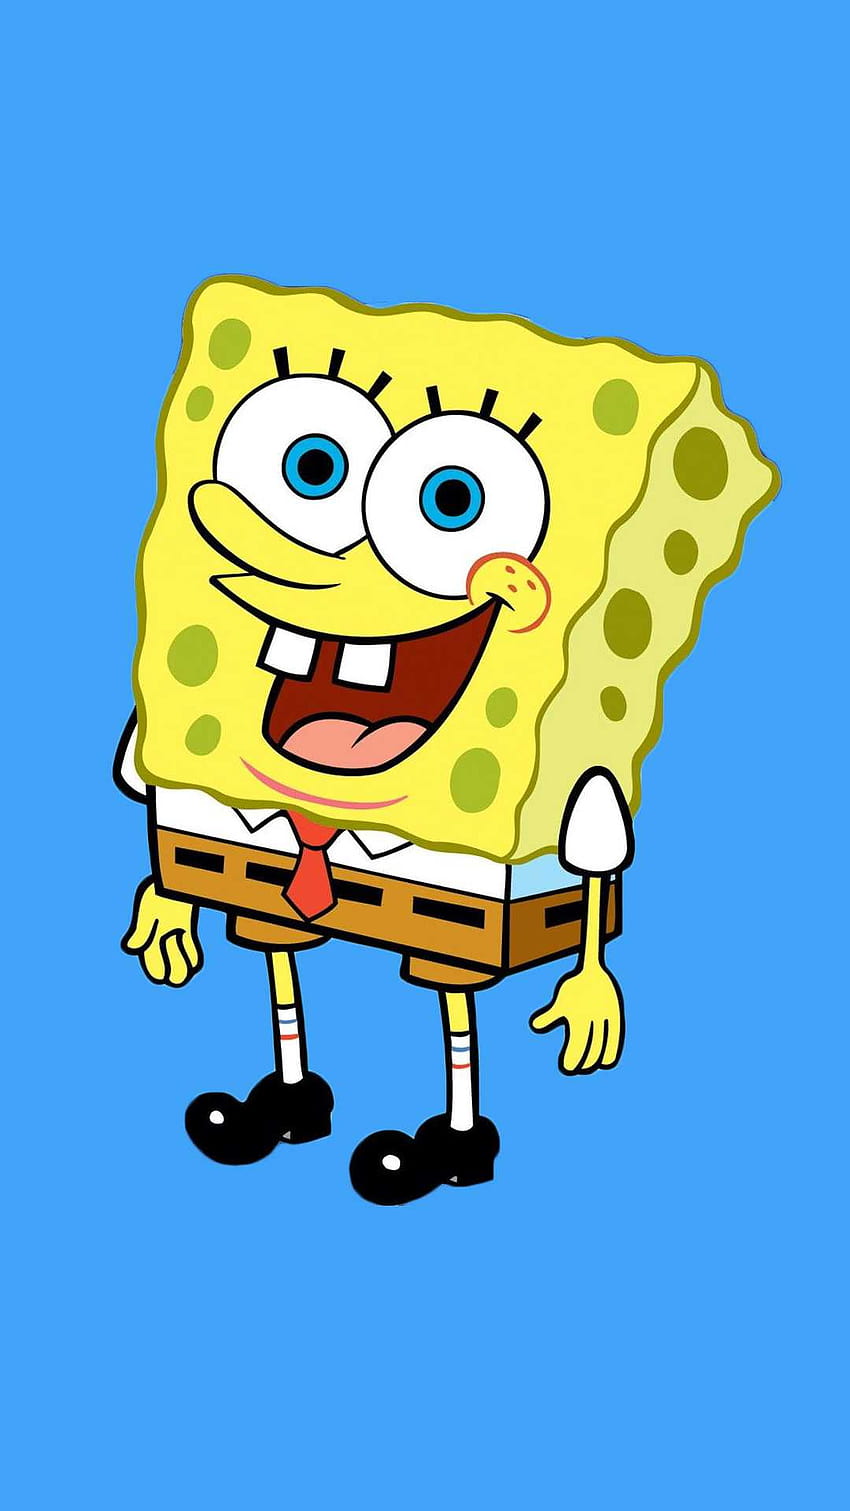 Spongebob and Patrick hình nền  SpongeBob SquarePants hình nền 40584614   fanpop